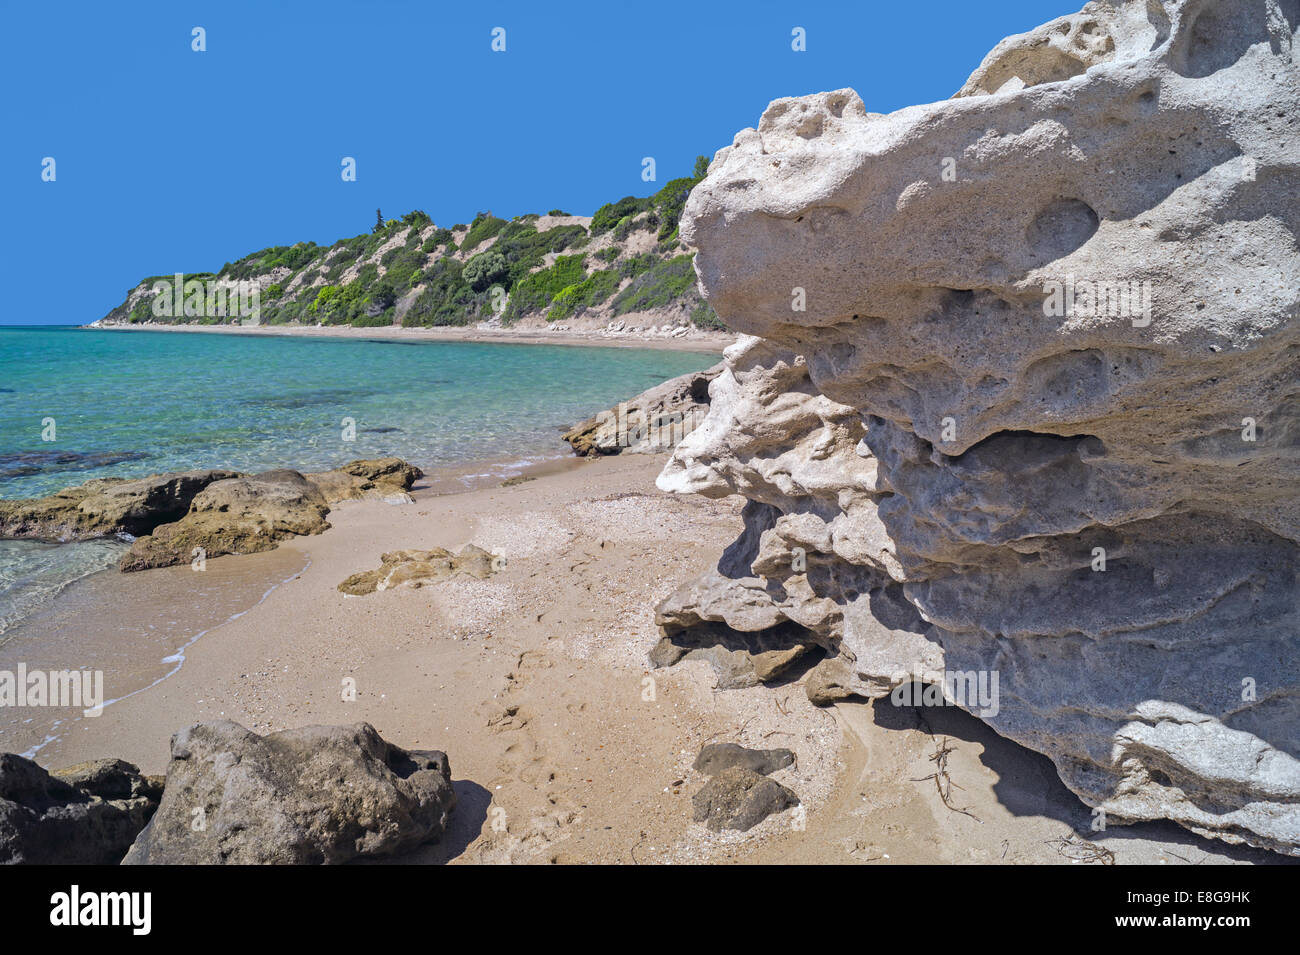 The famous beach at Halkidiki Peninsula, Greece Stock Photo